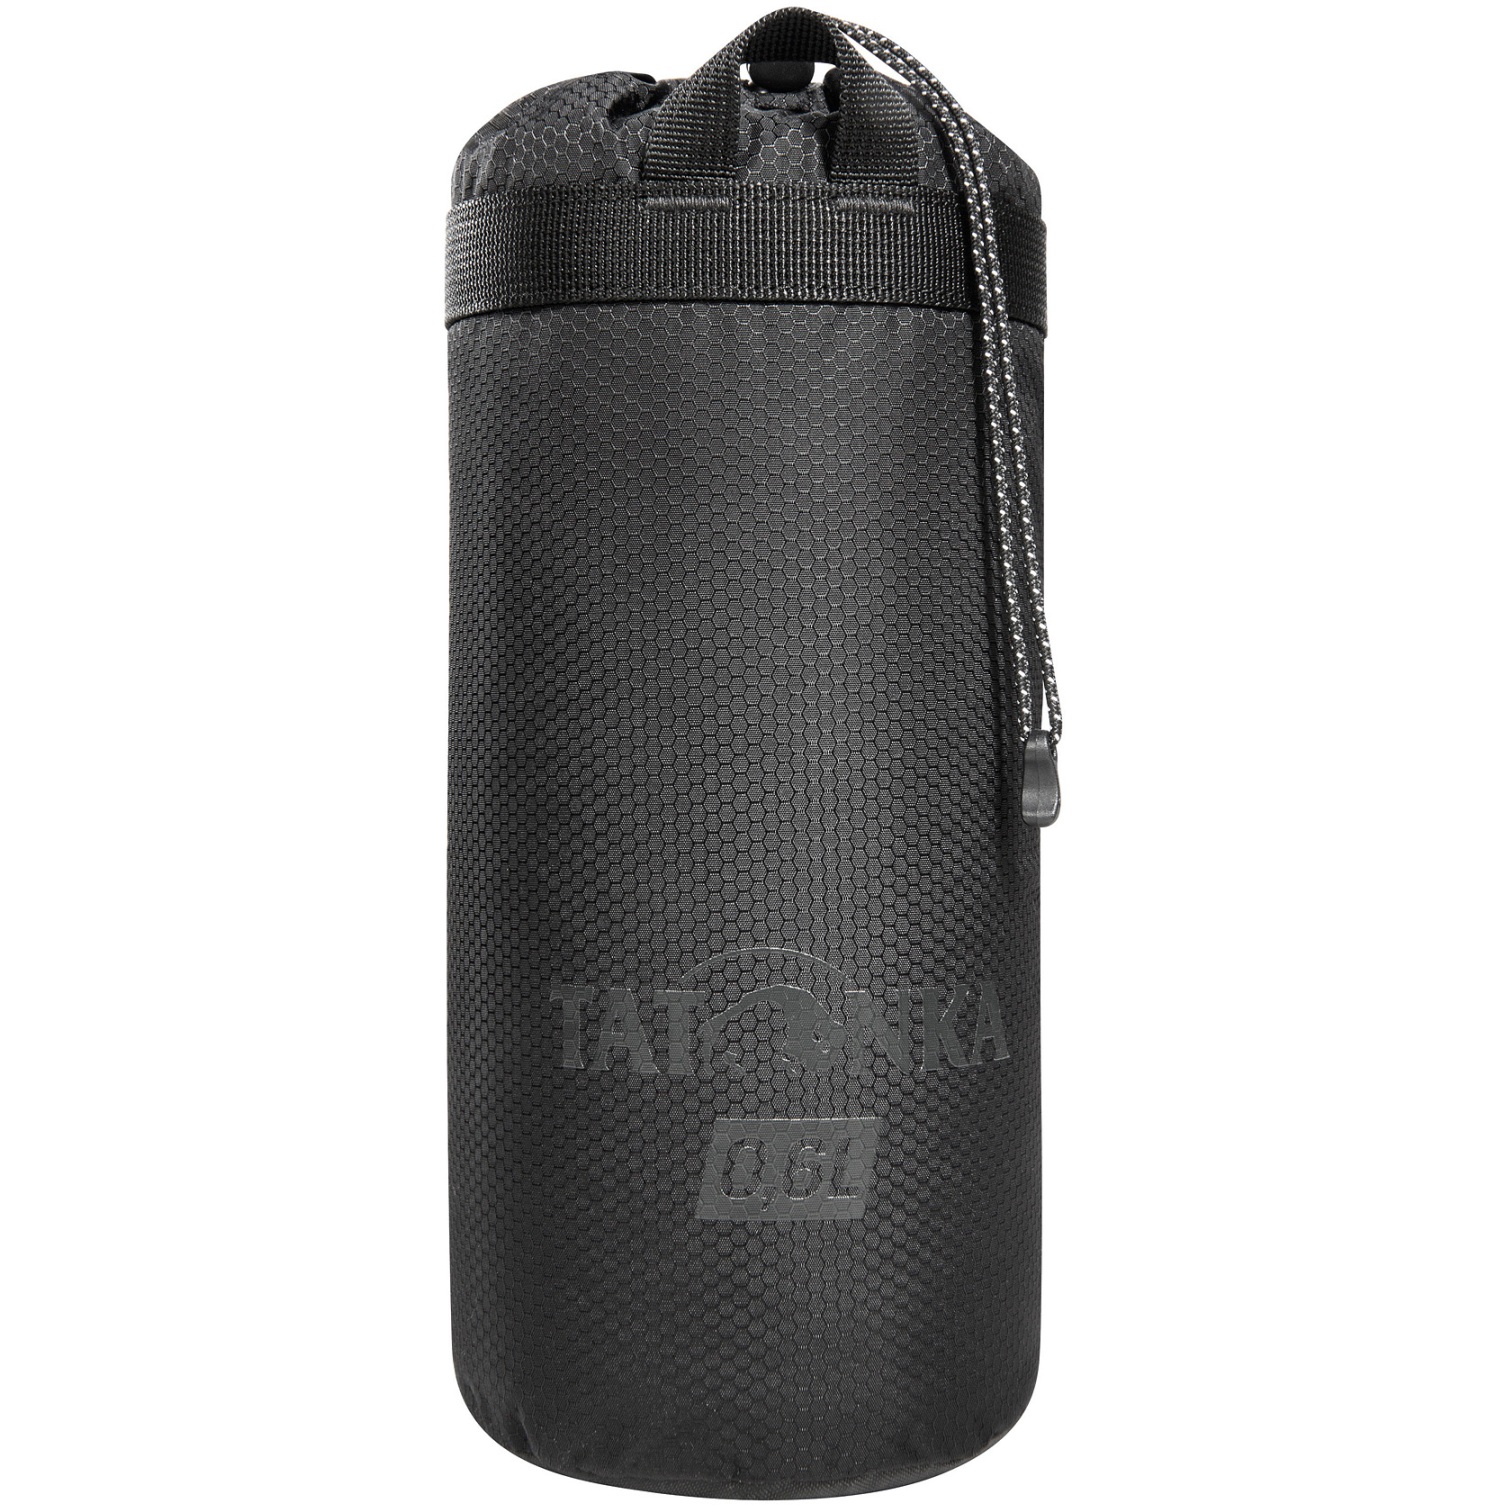 Productfoto van Tatonka Thermo Bottle Cover 0,6L - Isolerende Hoes - zwart